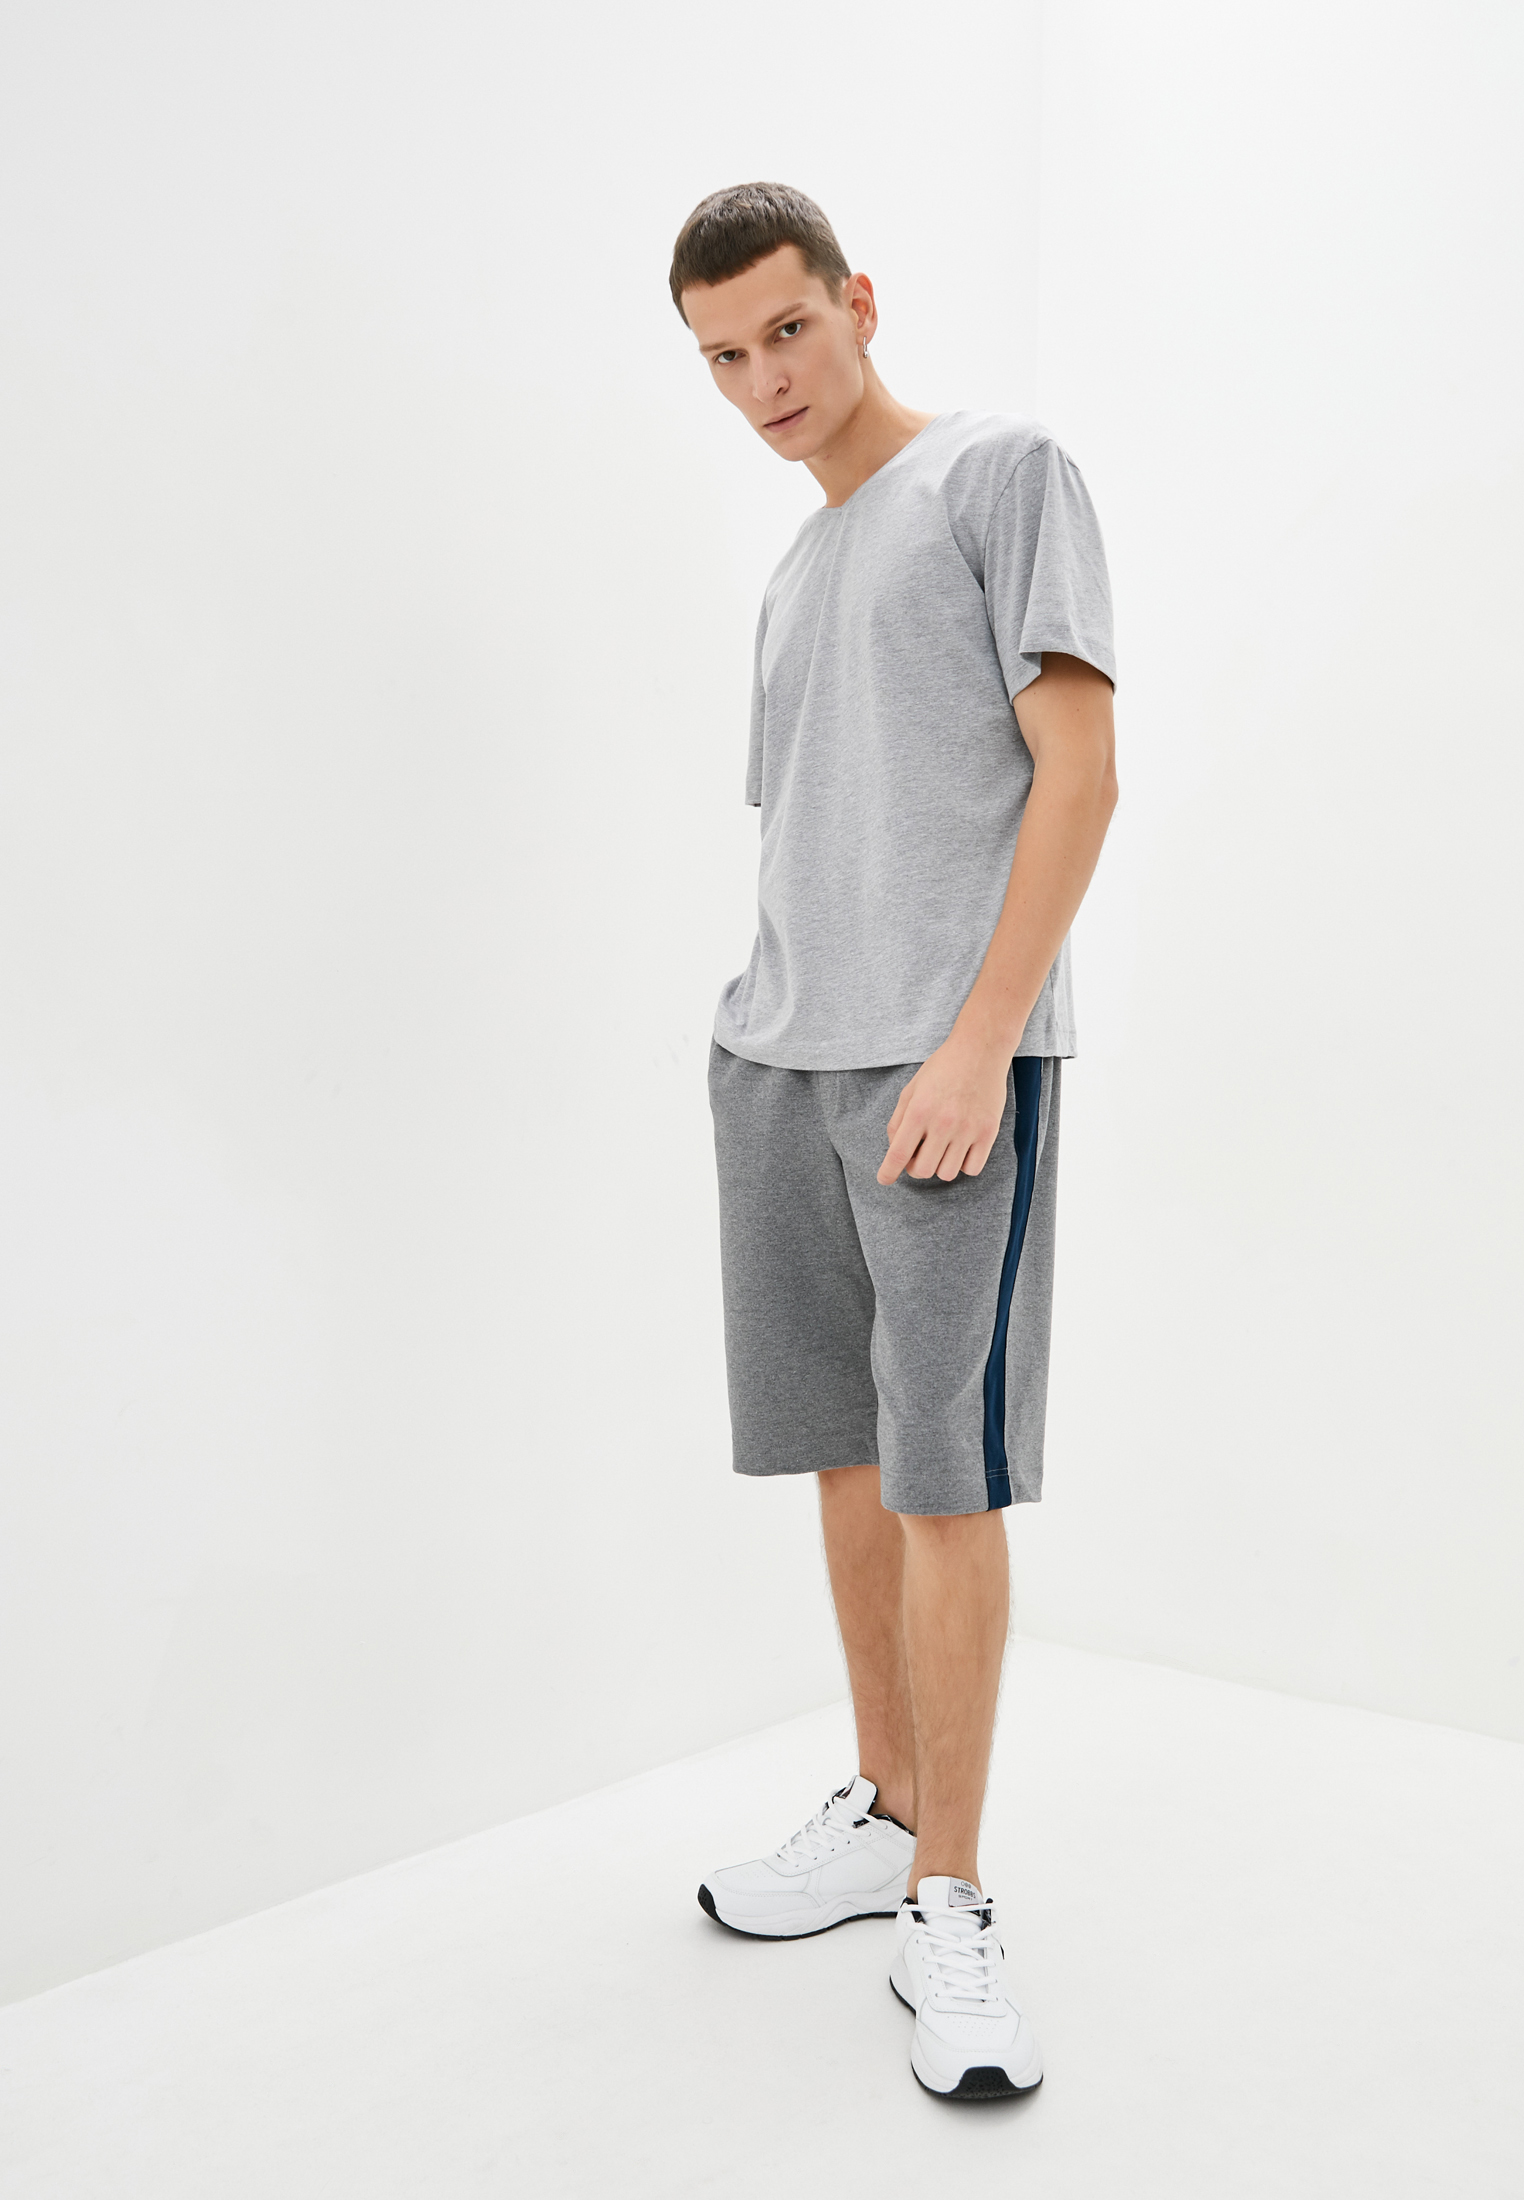 Shorts, vendor code: 1090-11, color: Dark gray melange